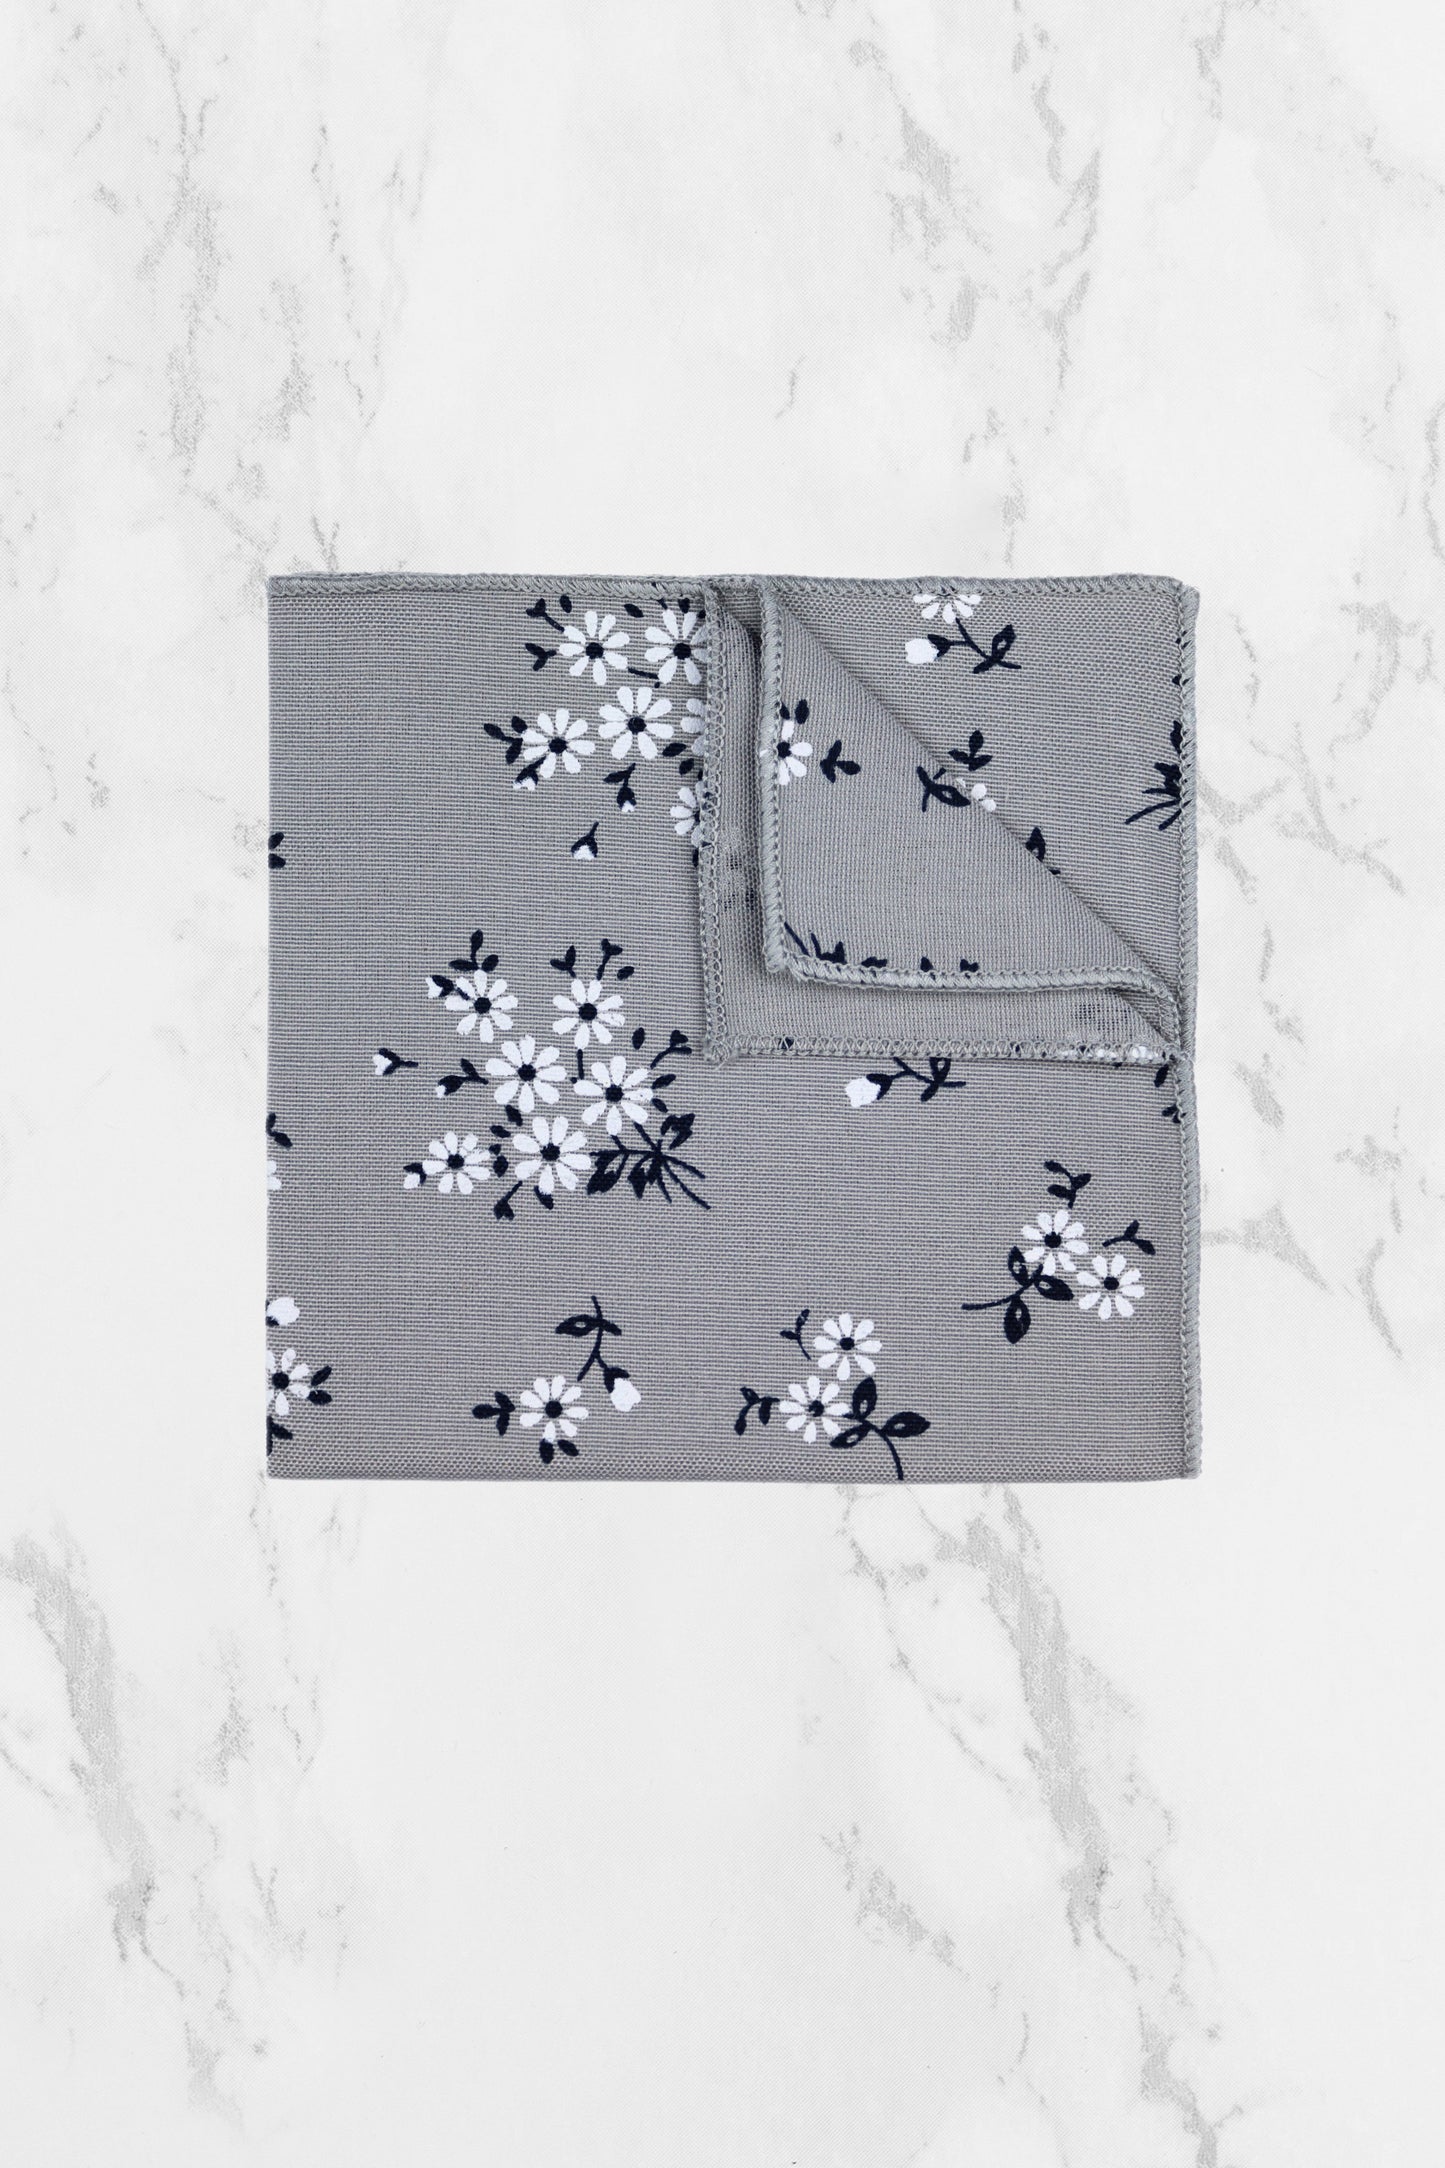 100% Cotton Floral Print Bow Tie - Grey & Navy